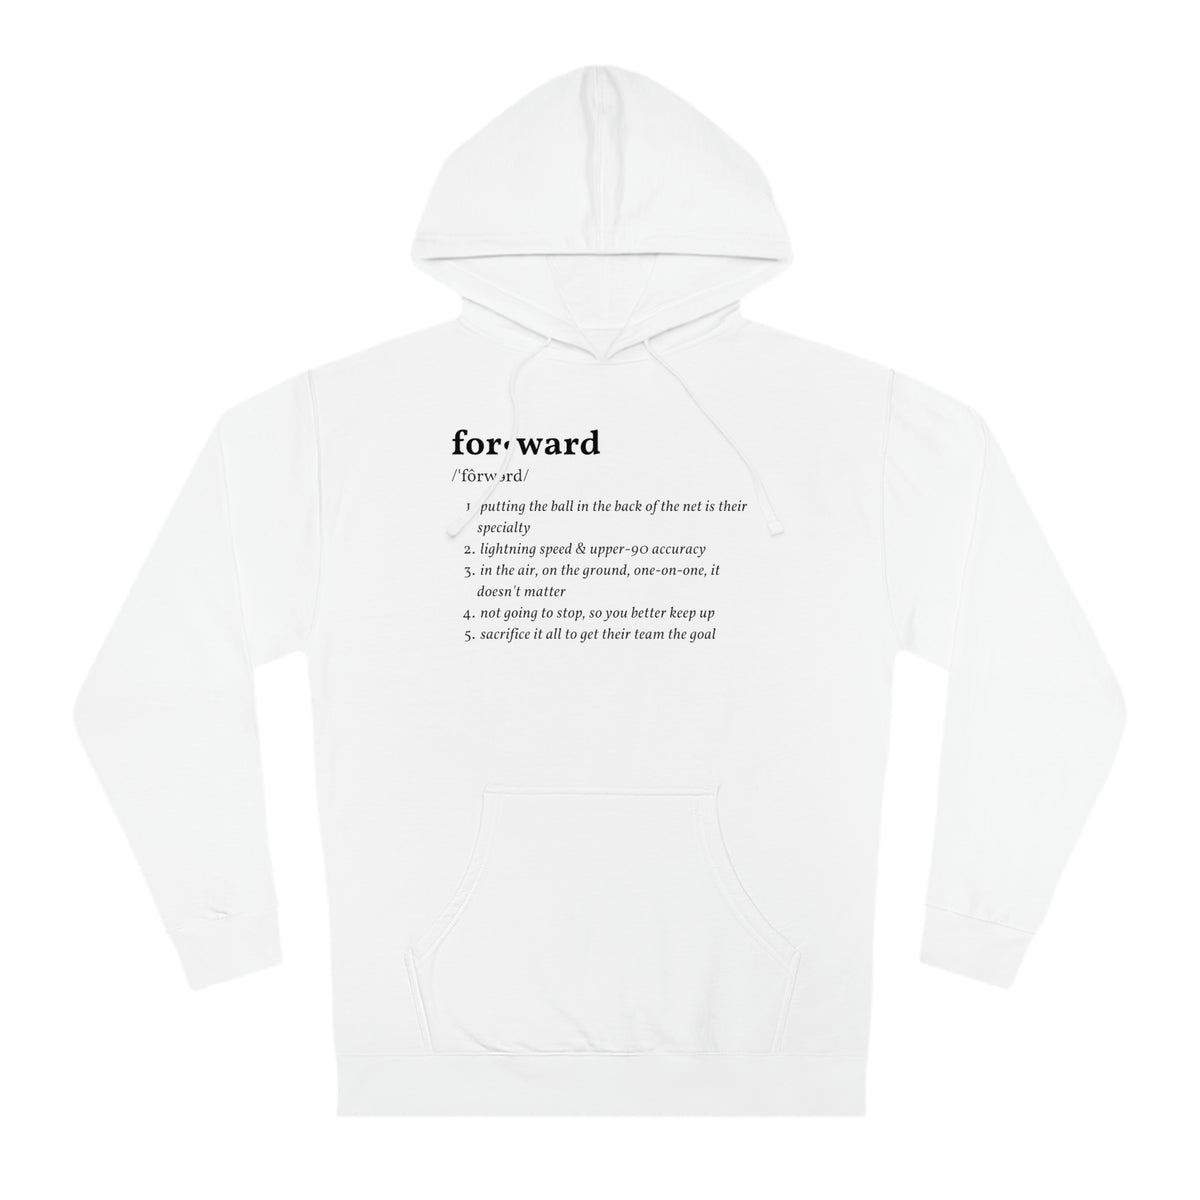 Forward Definition Adult Hooded Sweatshirt